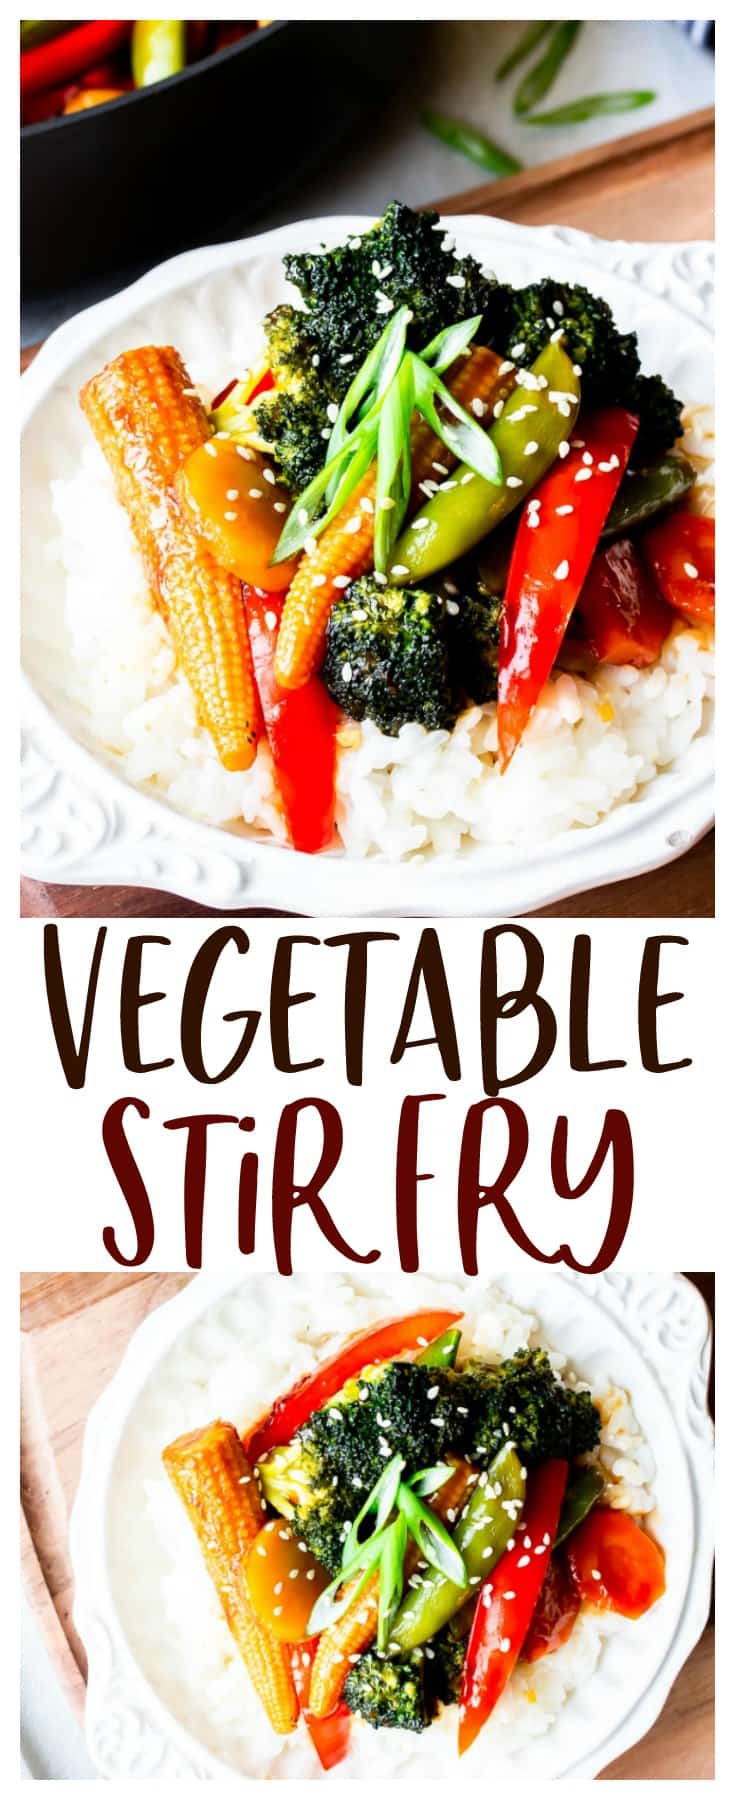 30-Minute EASY Vegetable Stir Fry Recipe - Delicious Little Bites